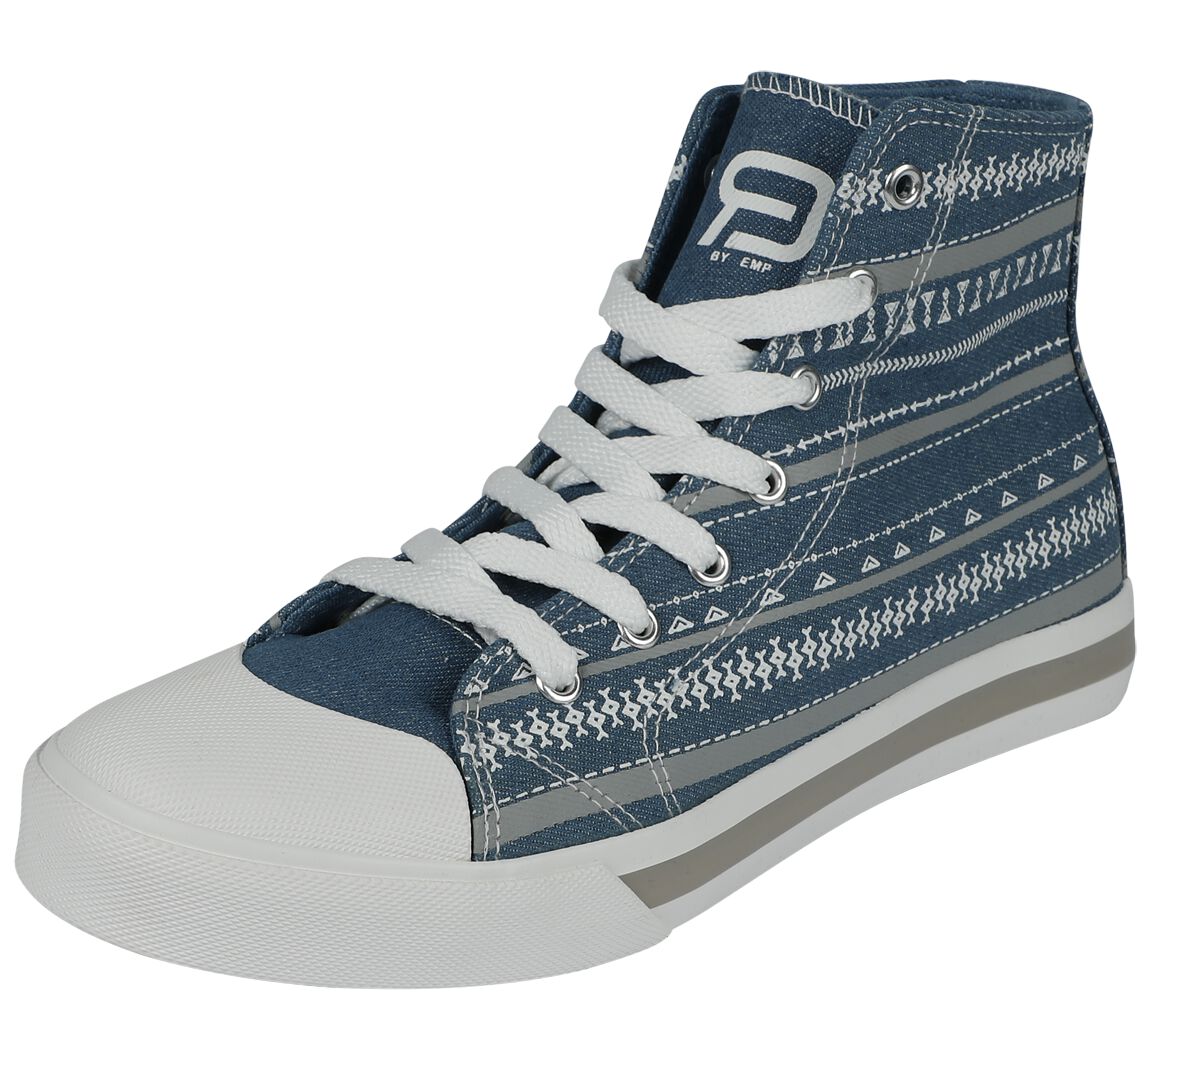 RED by EMP Sneaker with Graphic Ornaments Sneaker high blau grau weiß in EU41